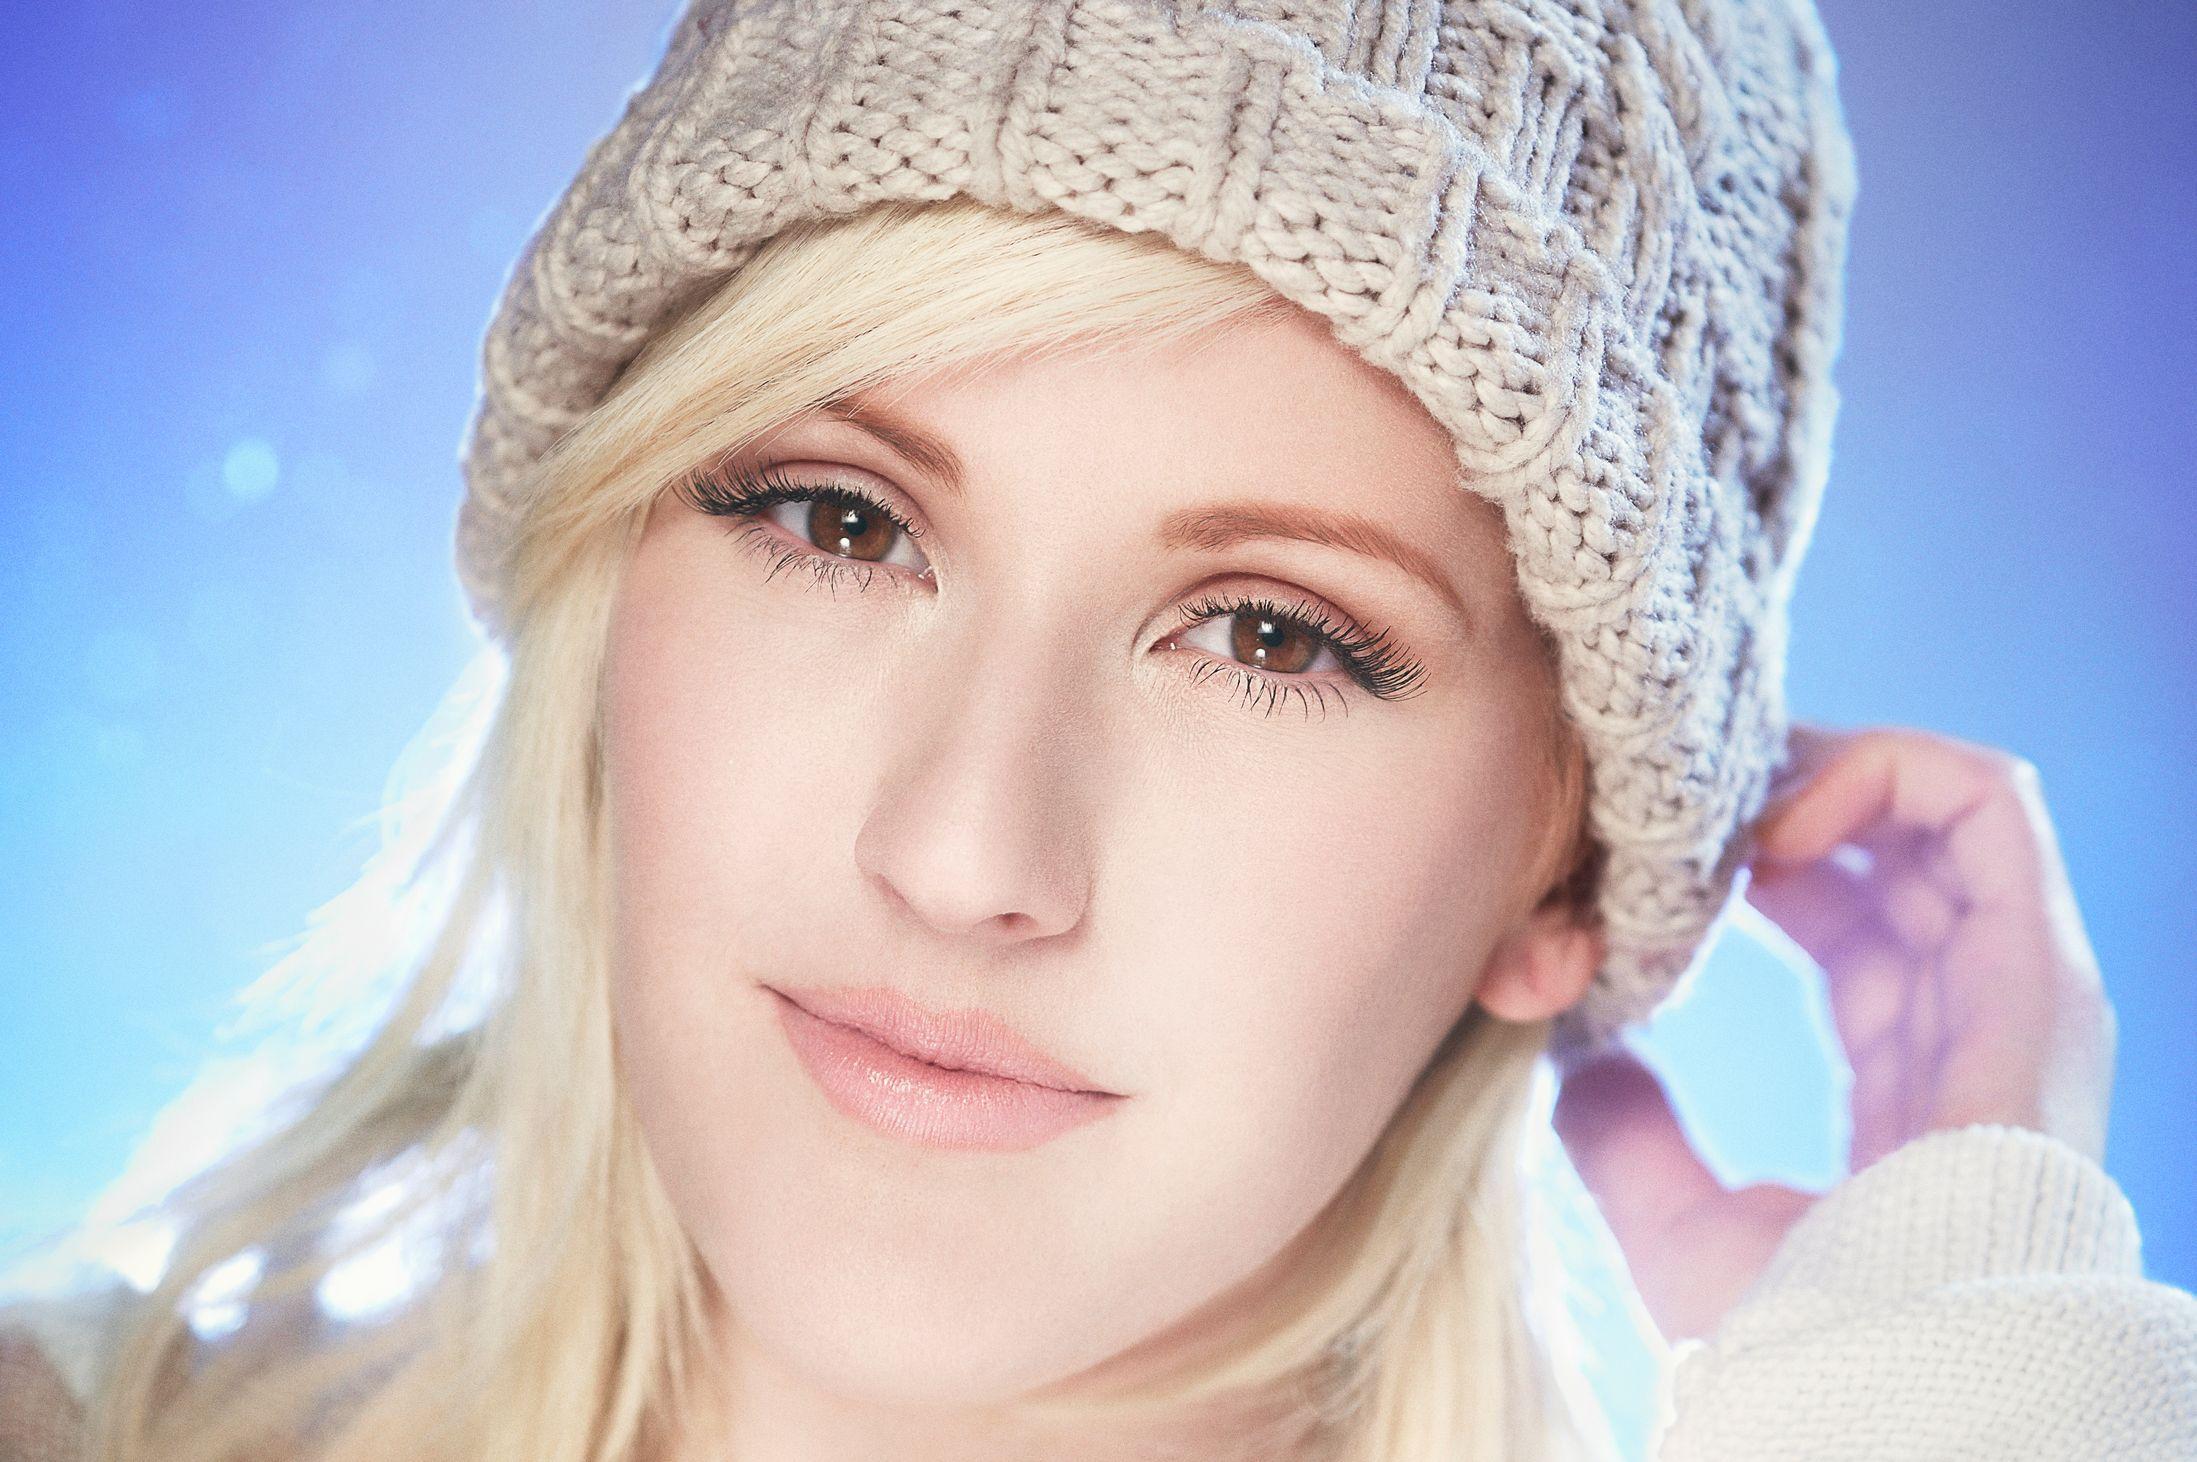 Photoshoot singer Ellie Goulding wallpaper and image